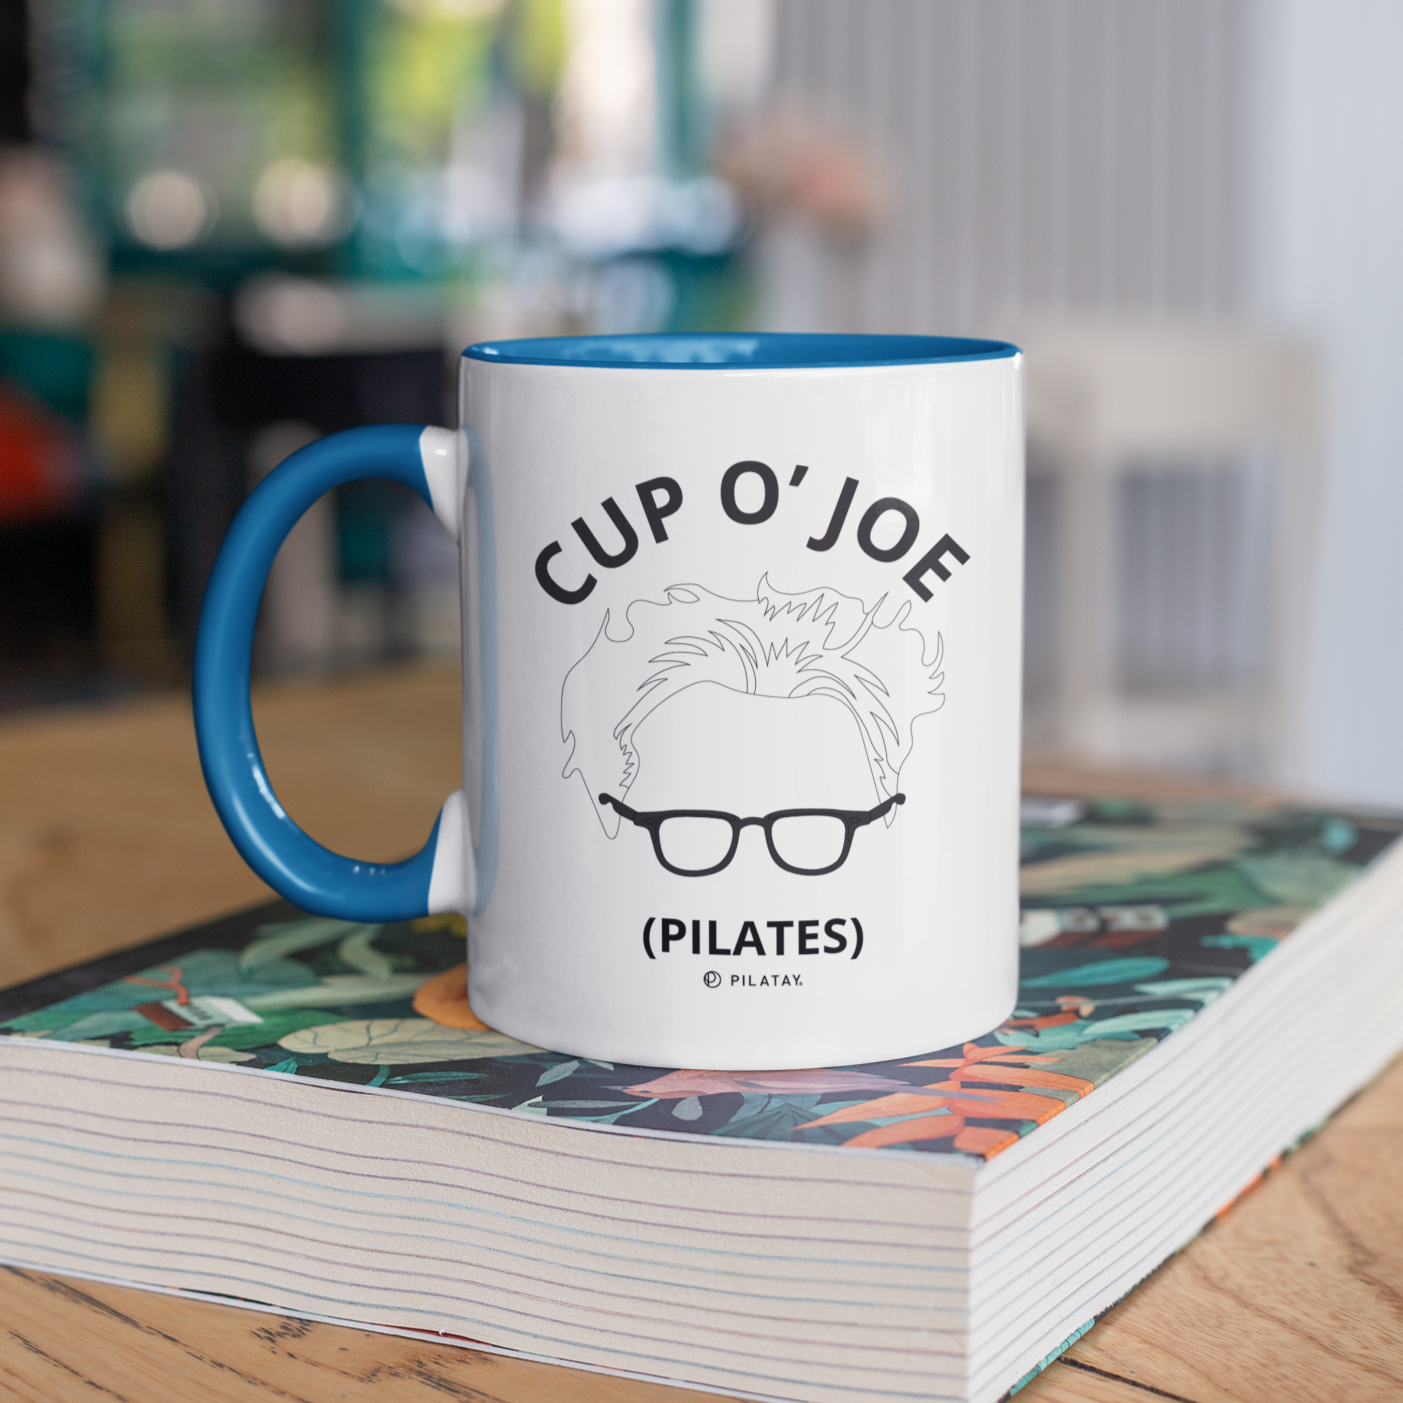 Joseph Pilates Coffee Mug - Pilates gifts - gifts for pilates teachers - joe pilates - classical pilates